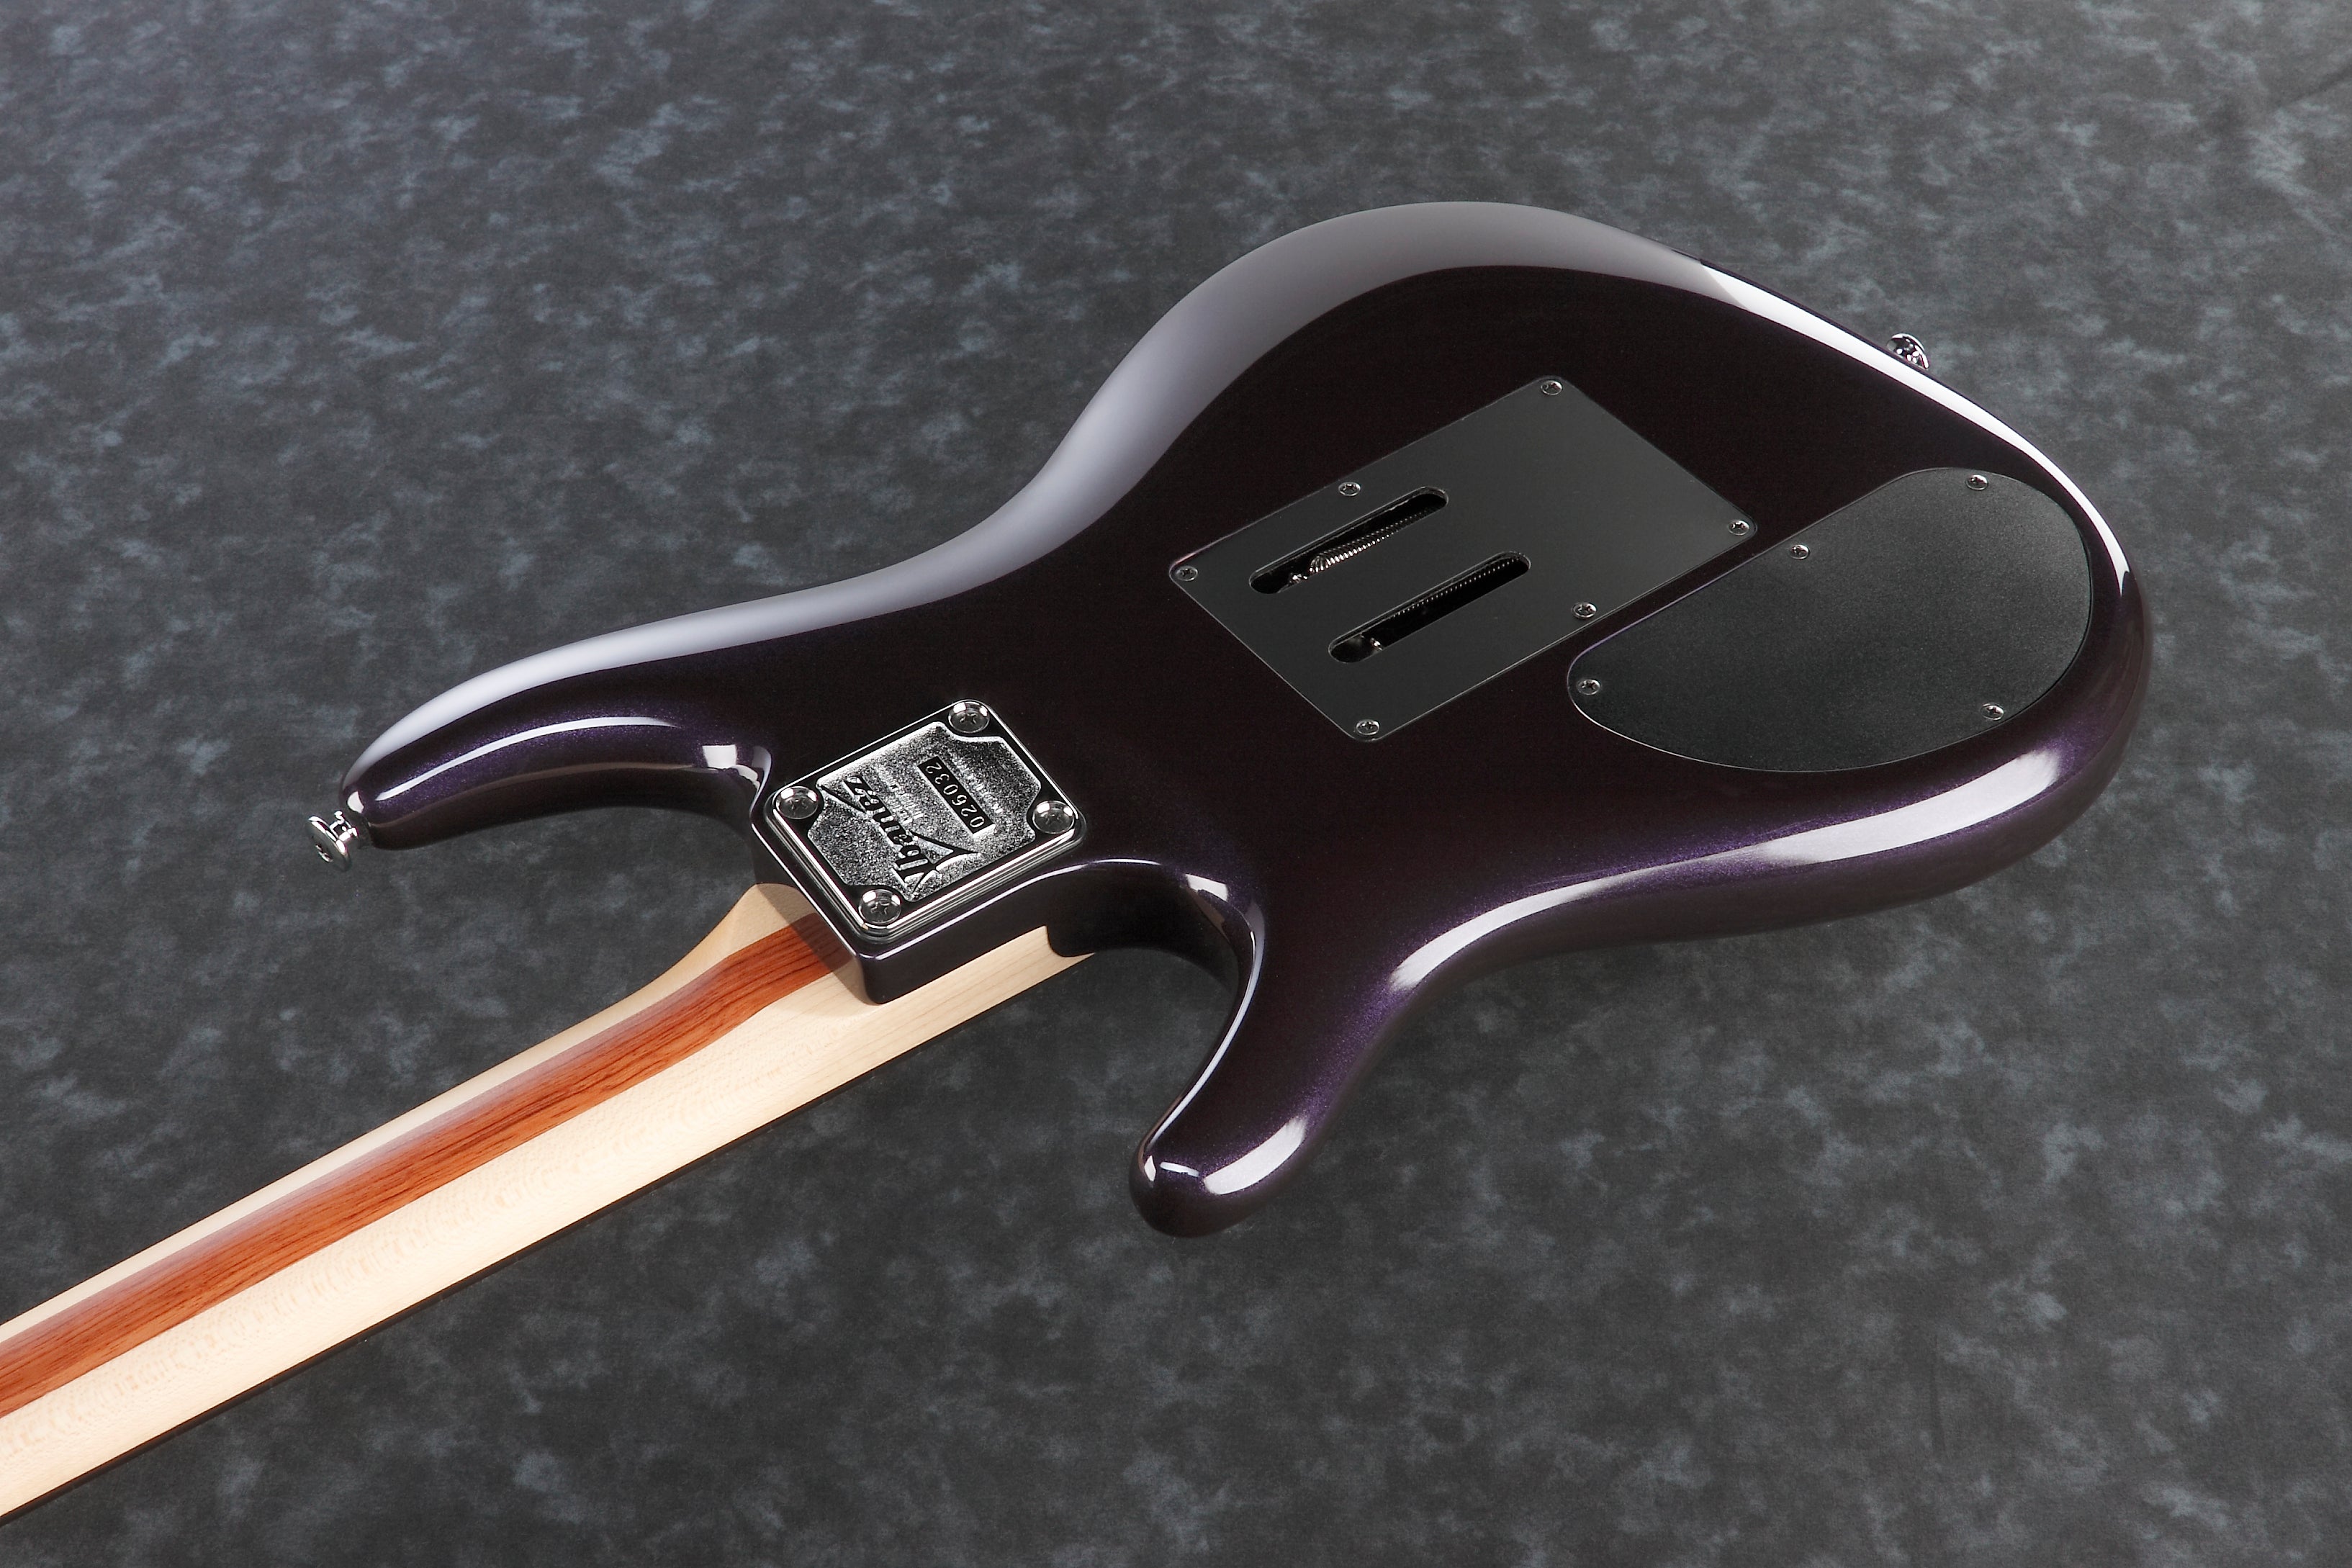 Ibanez JS Series JS2450MCP (Muscle Car Purple) Japan made Electric Guitar 電結他